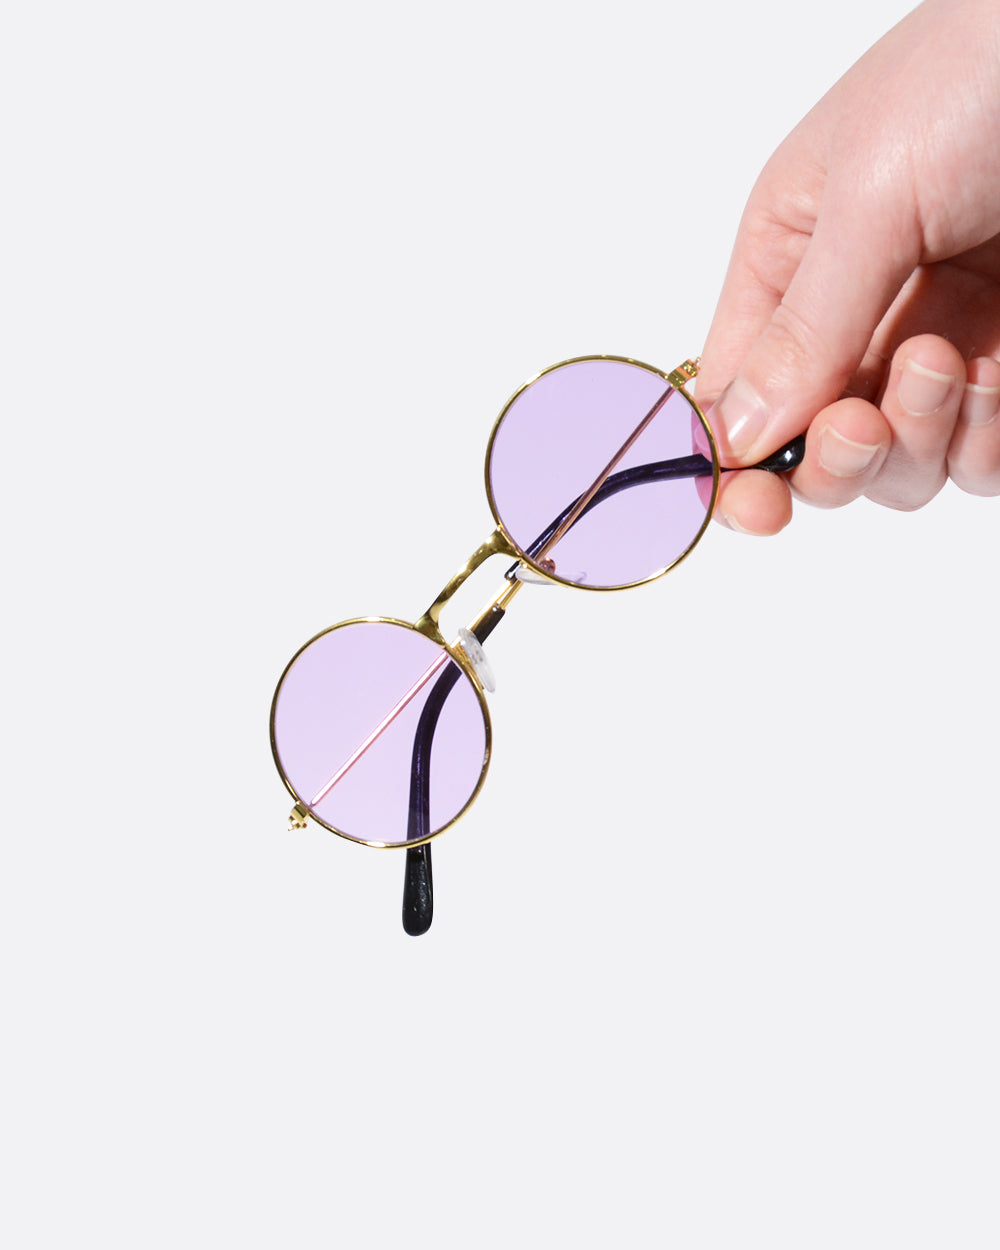 Tinted Lens Dog Glasses - Purple